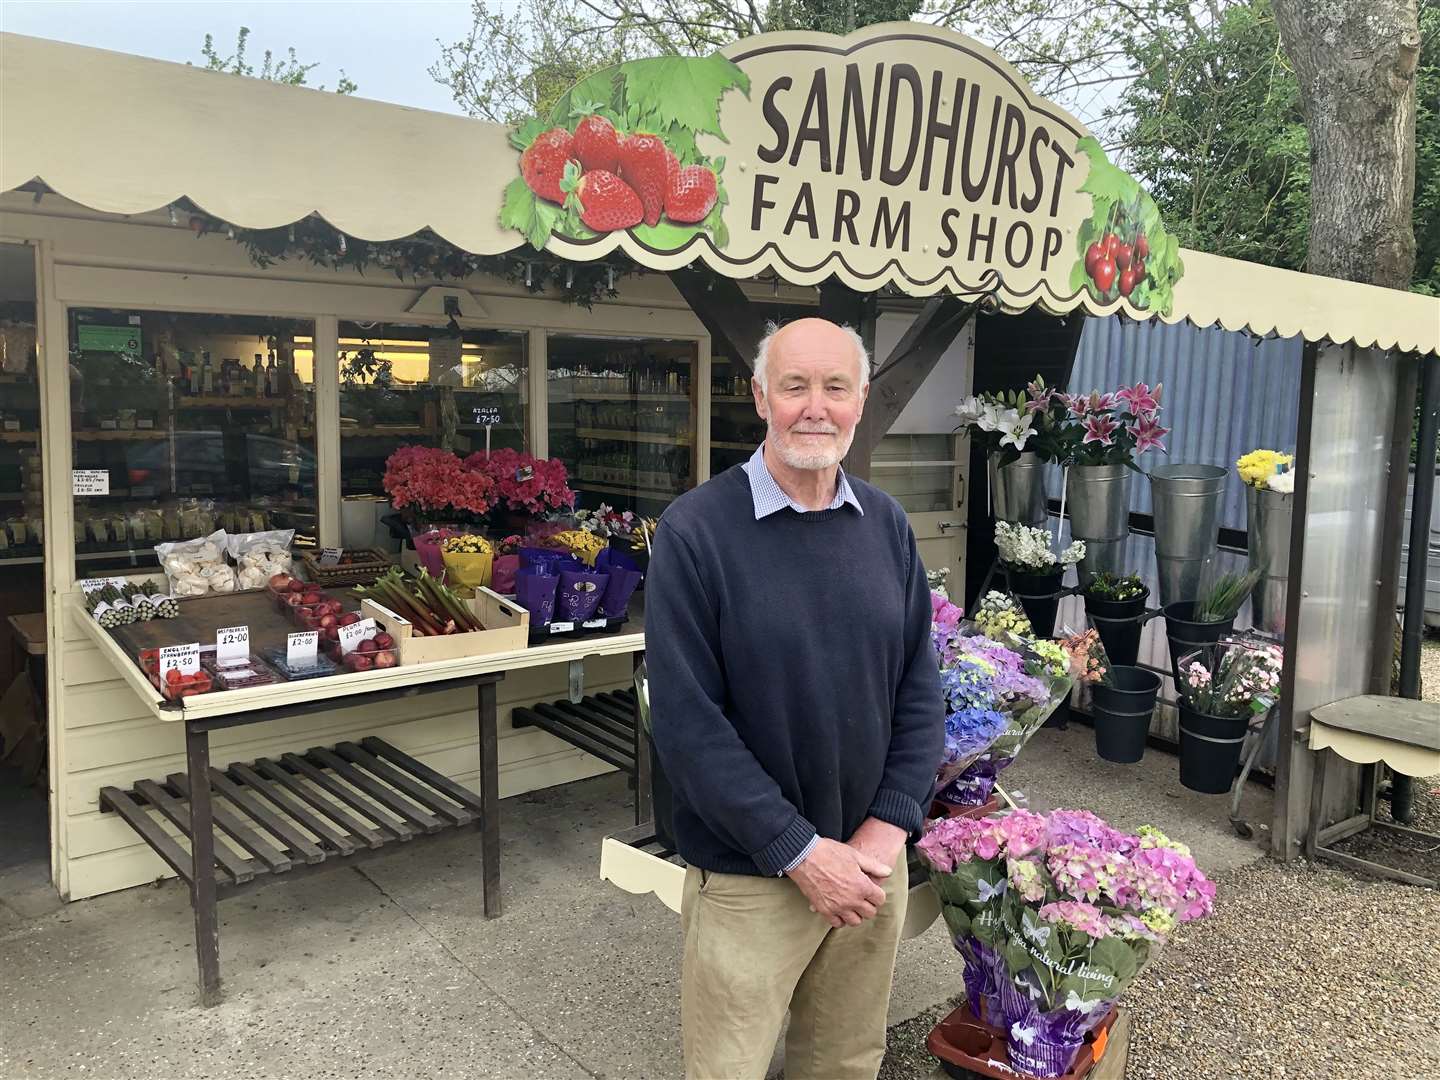 Ashley Goodhew has run the Sandhurst Farm Shop for 38 years (9376534)